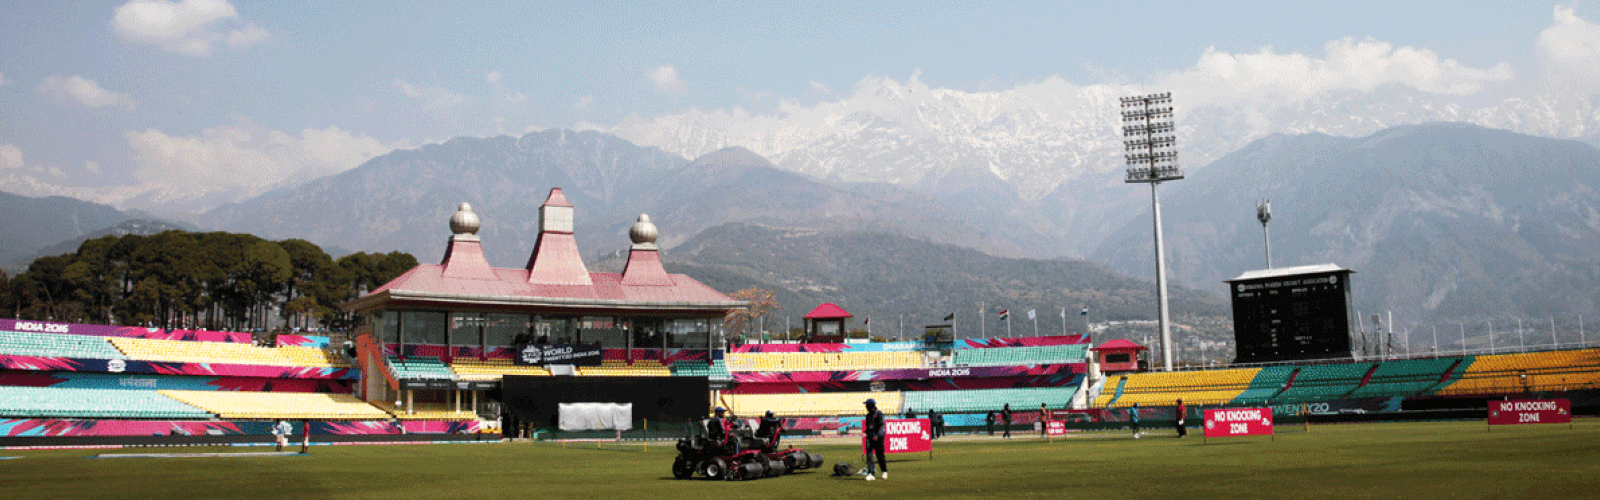 Himachal Pradesh Cricket stadium in Dharamsala